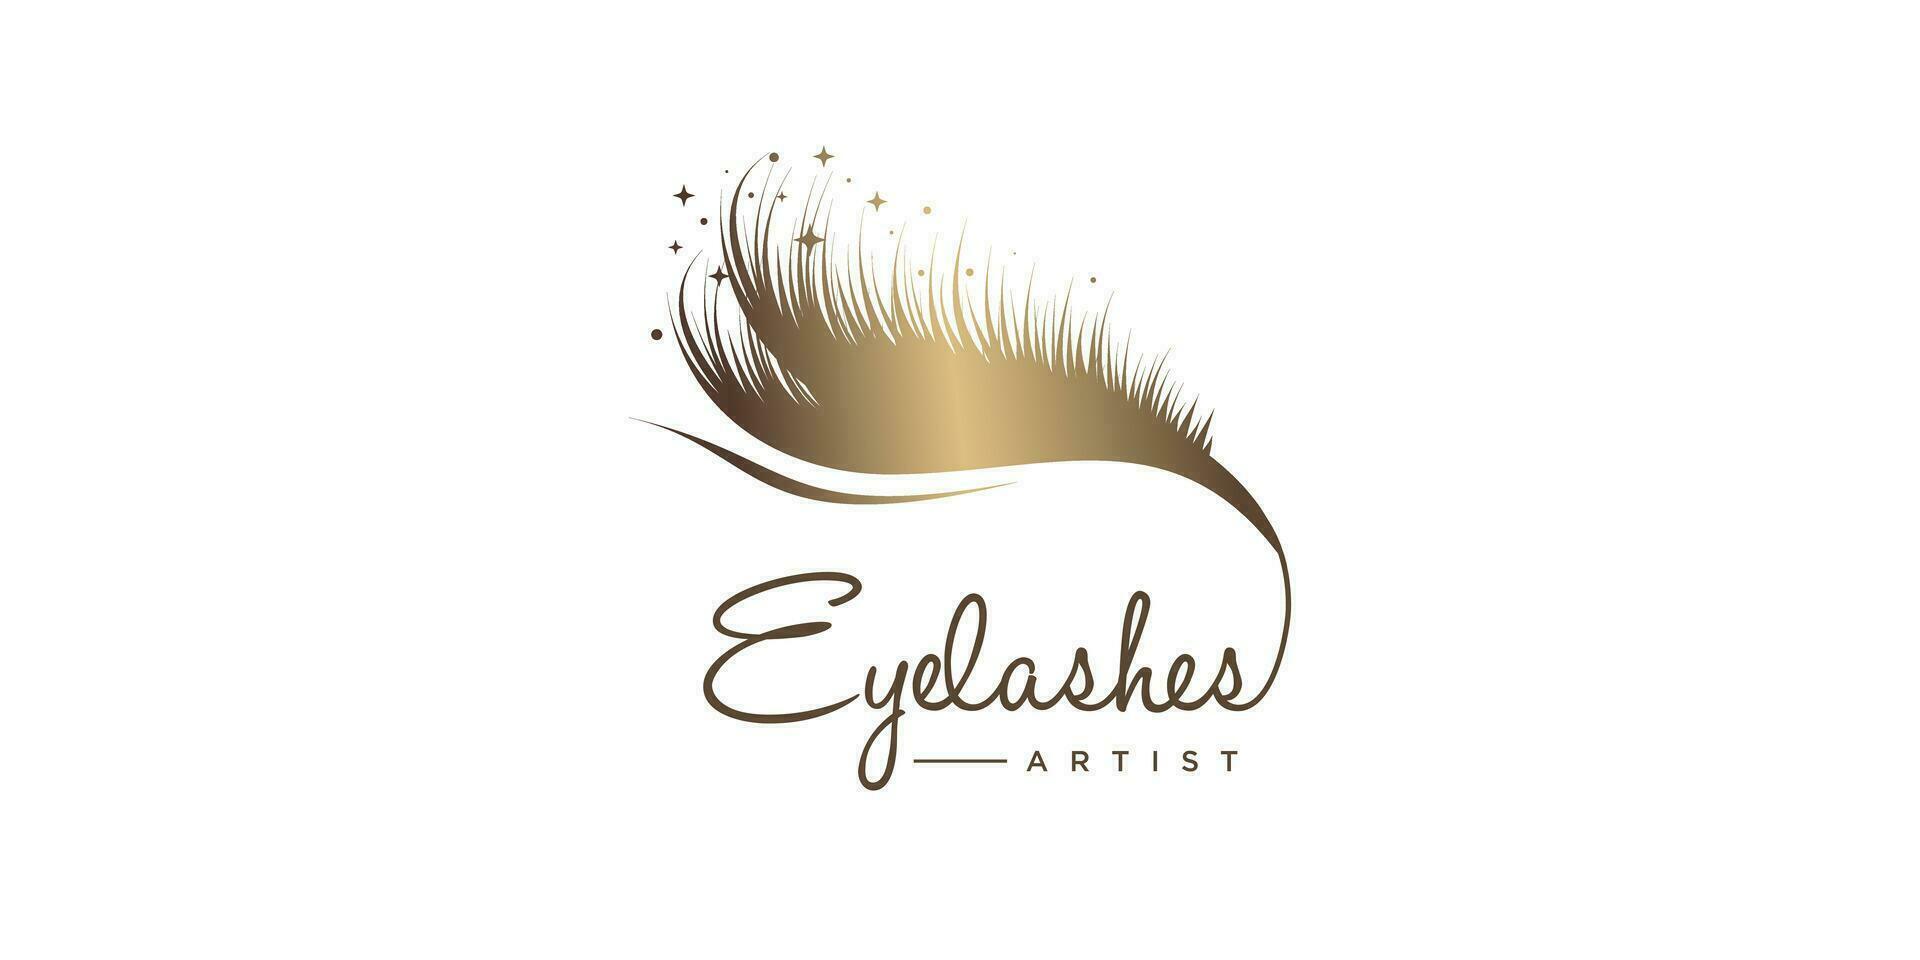 Eyelashes logo design collection with modern beauty concept vector